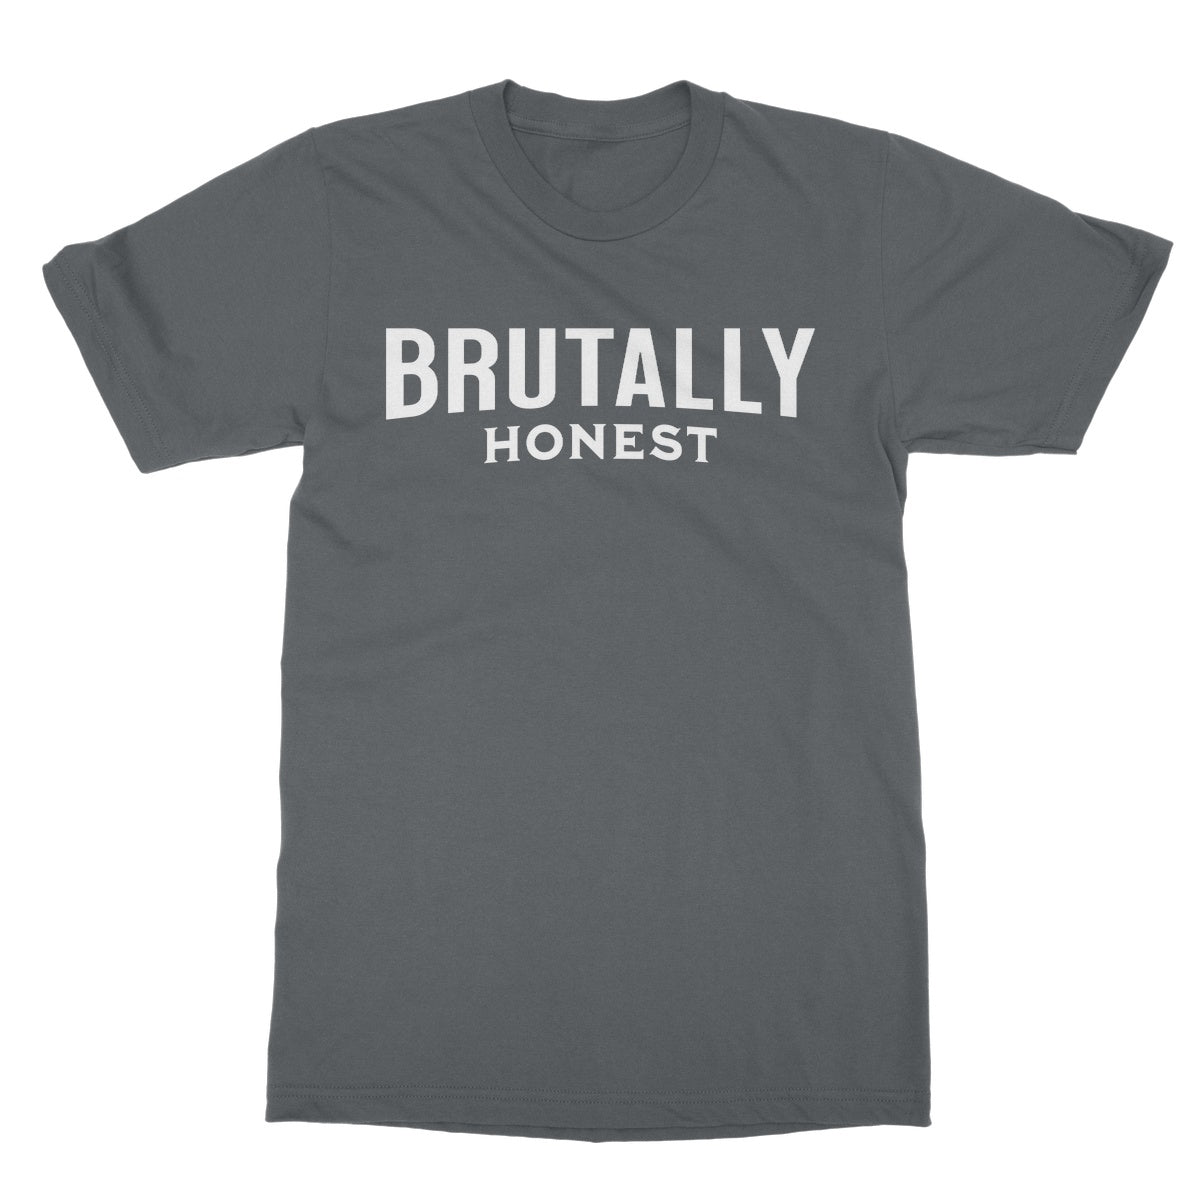 brutally honest t shirt grey